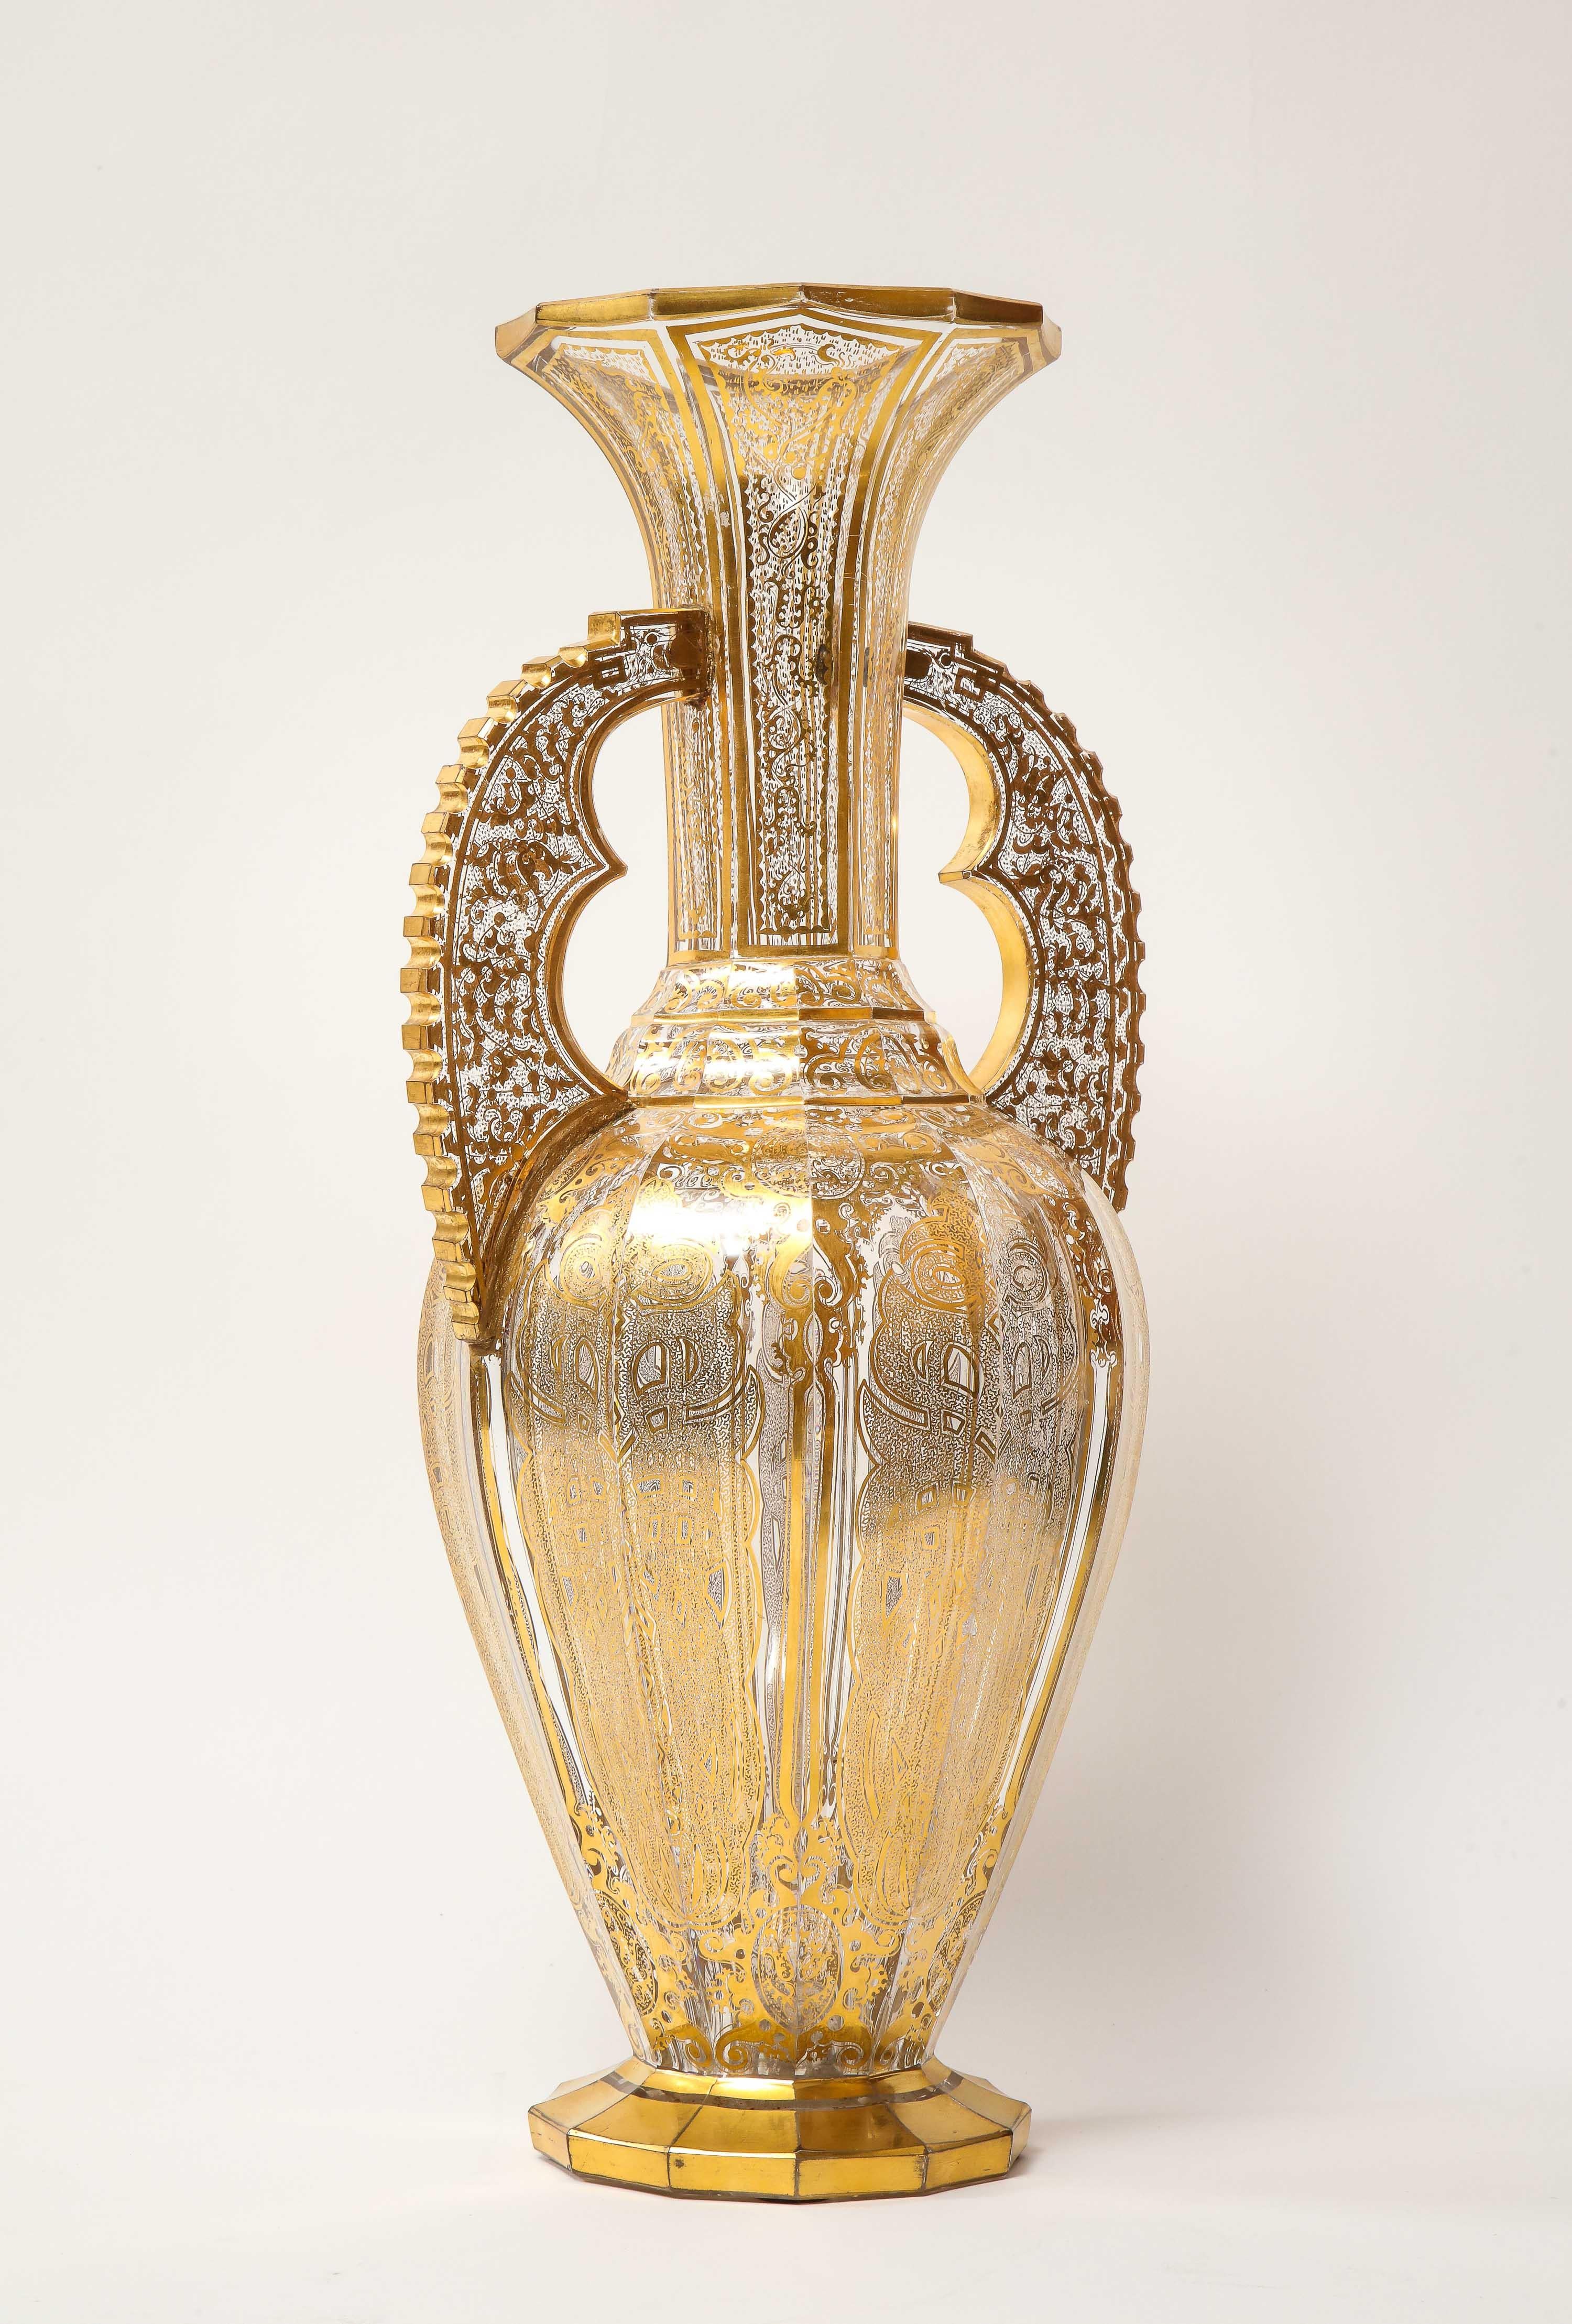 Bohemian Cut-Glass Vase in the 